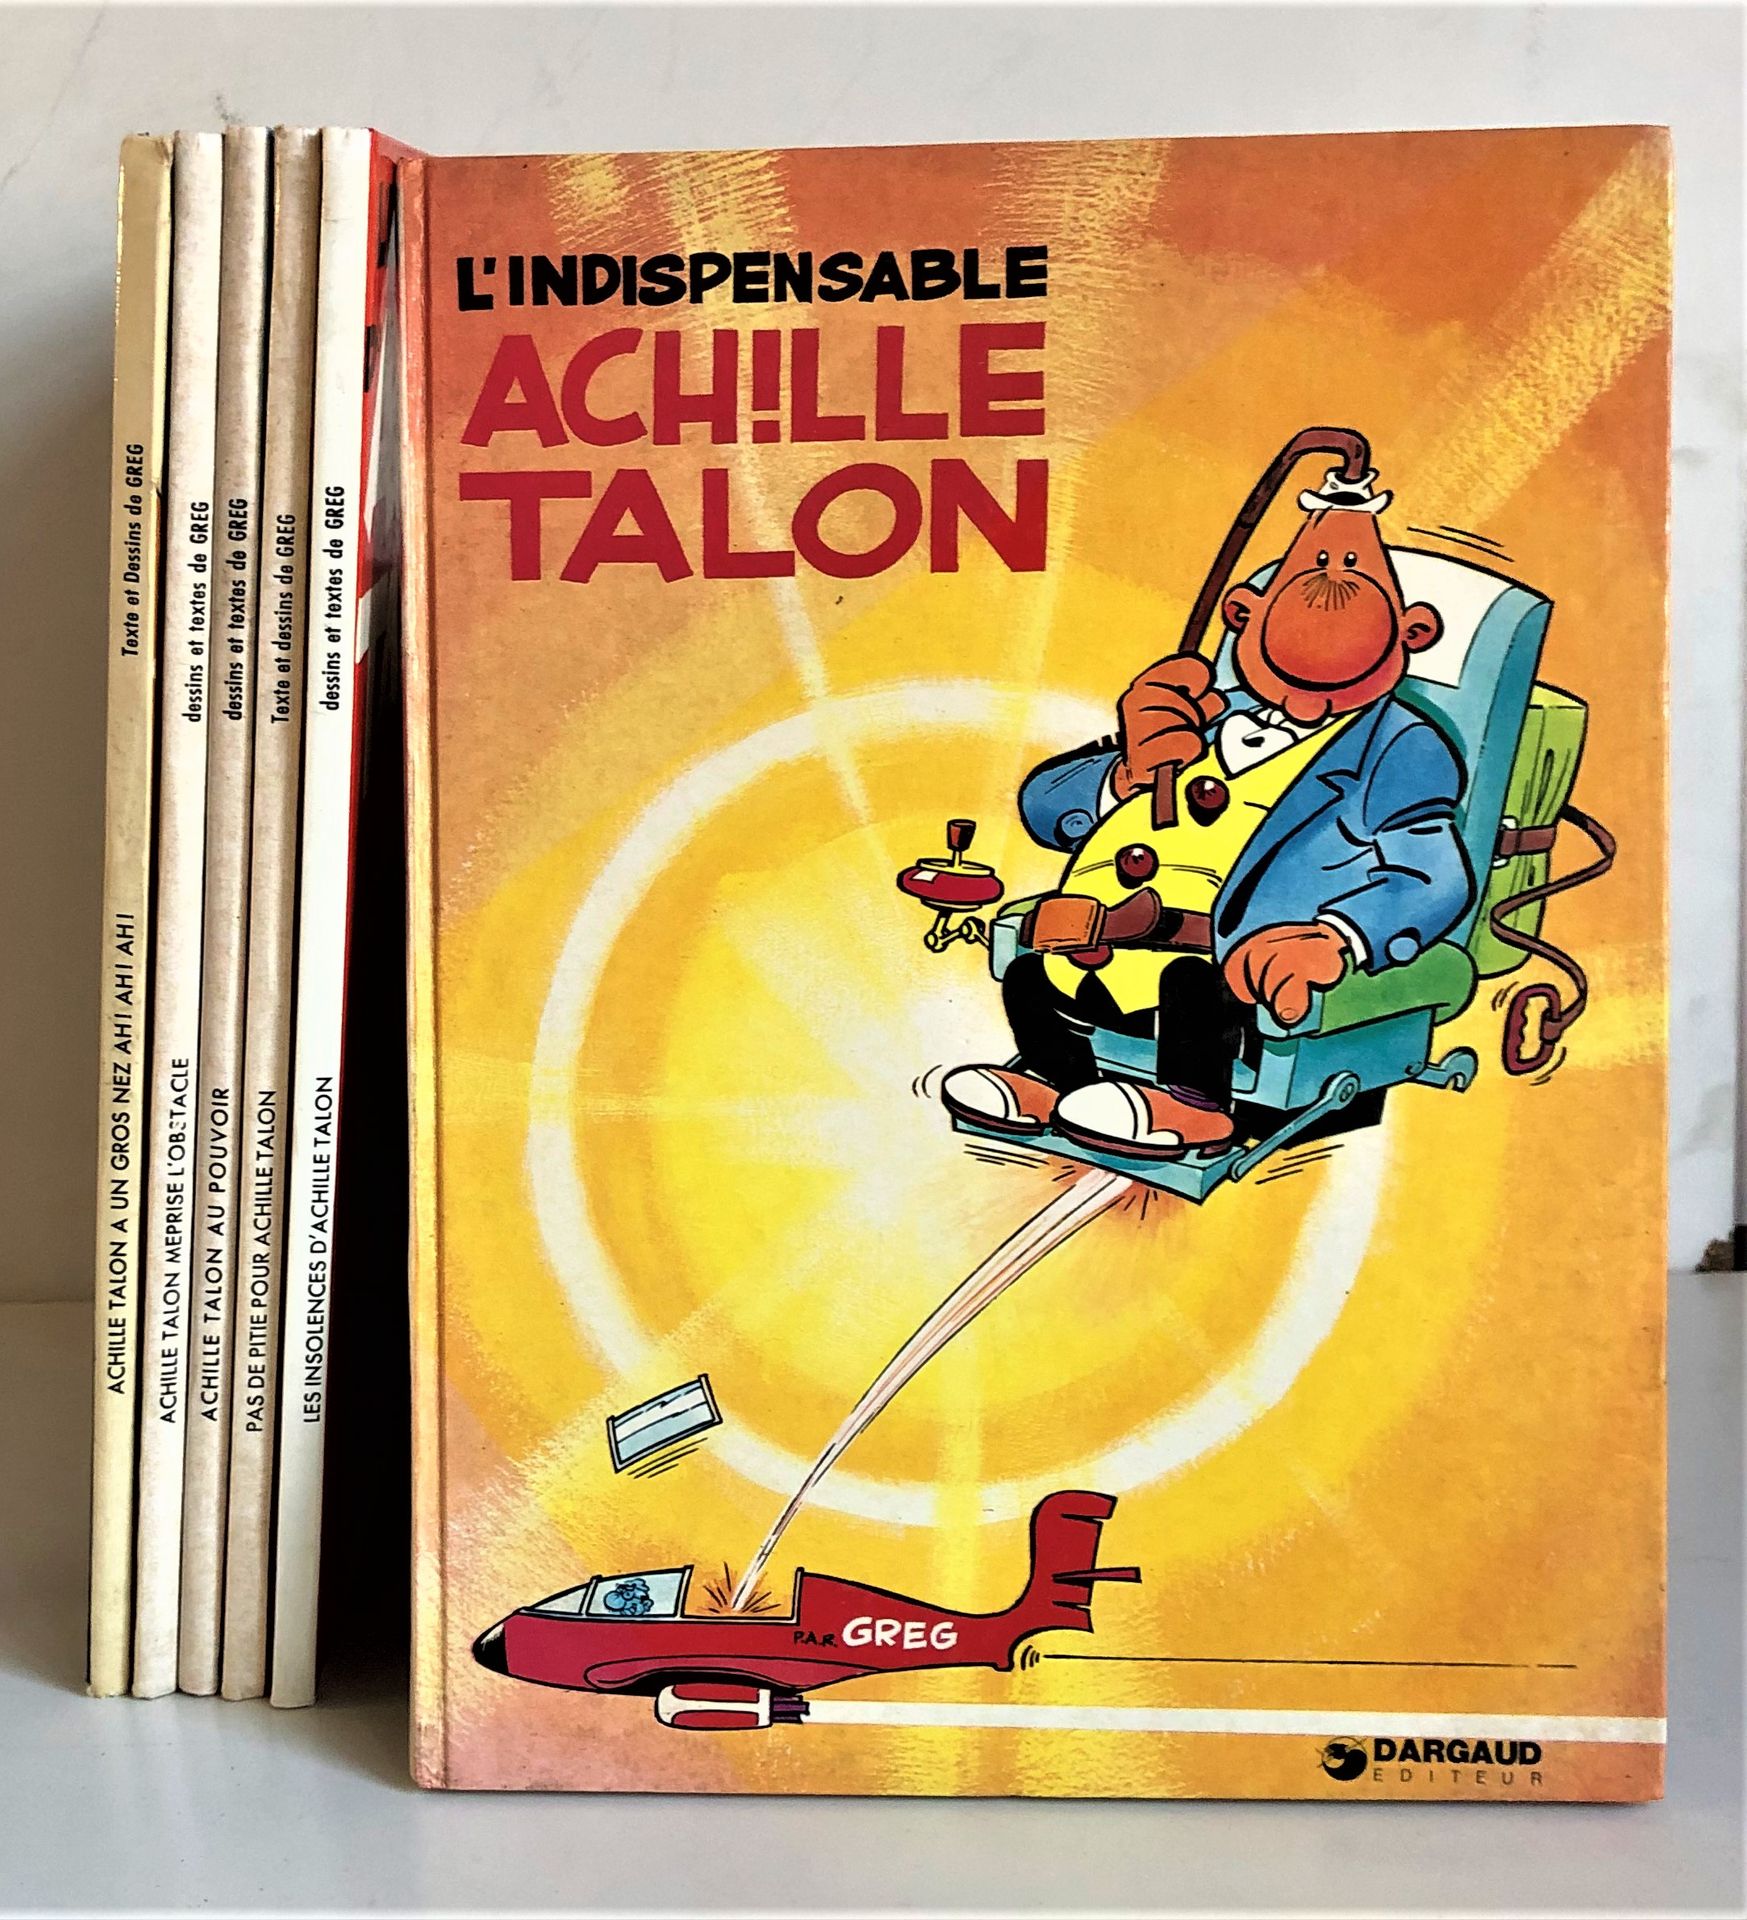 GREG Achille Talon - 5张专辑 - Dargaud出版社